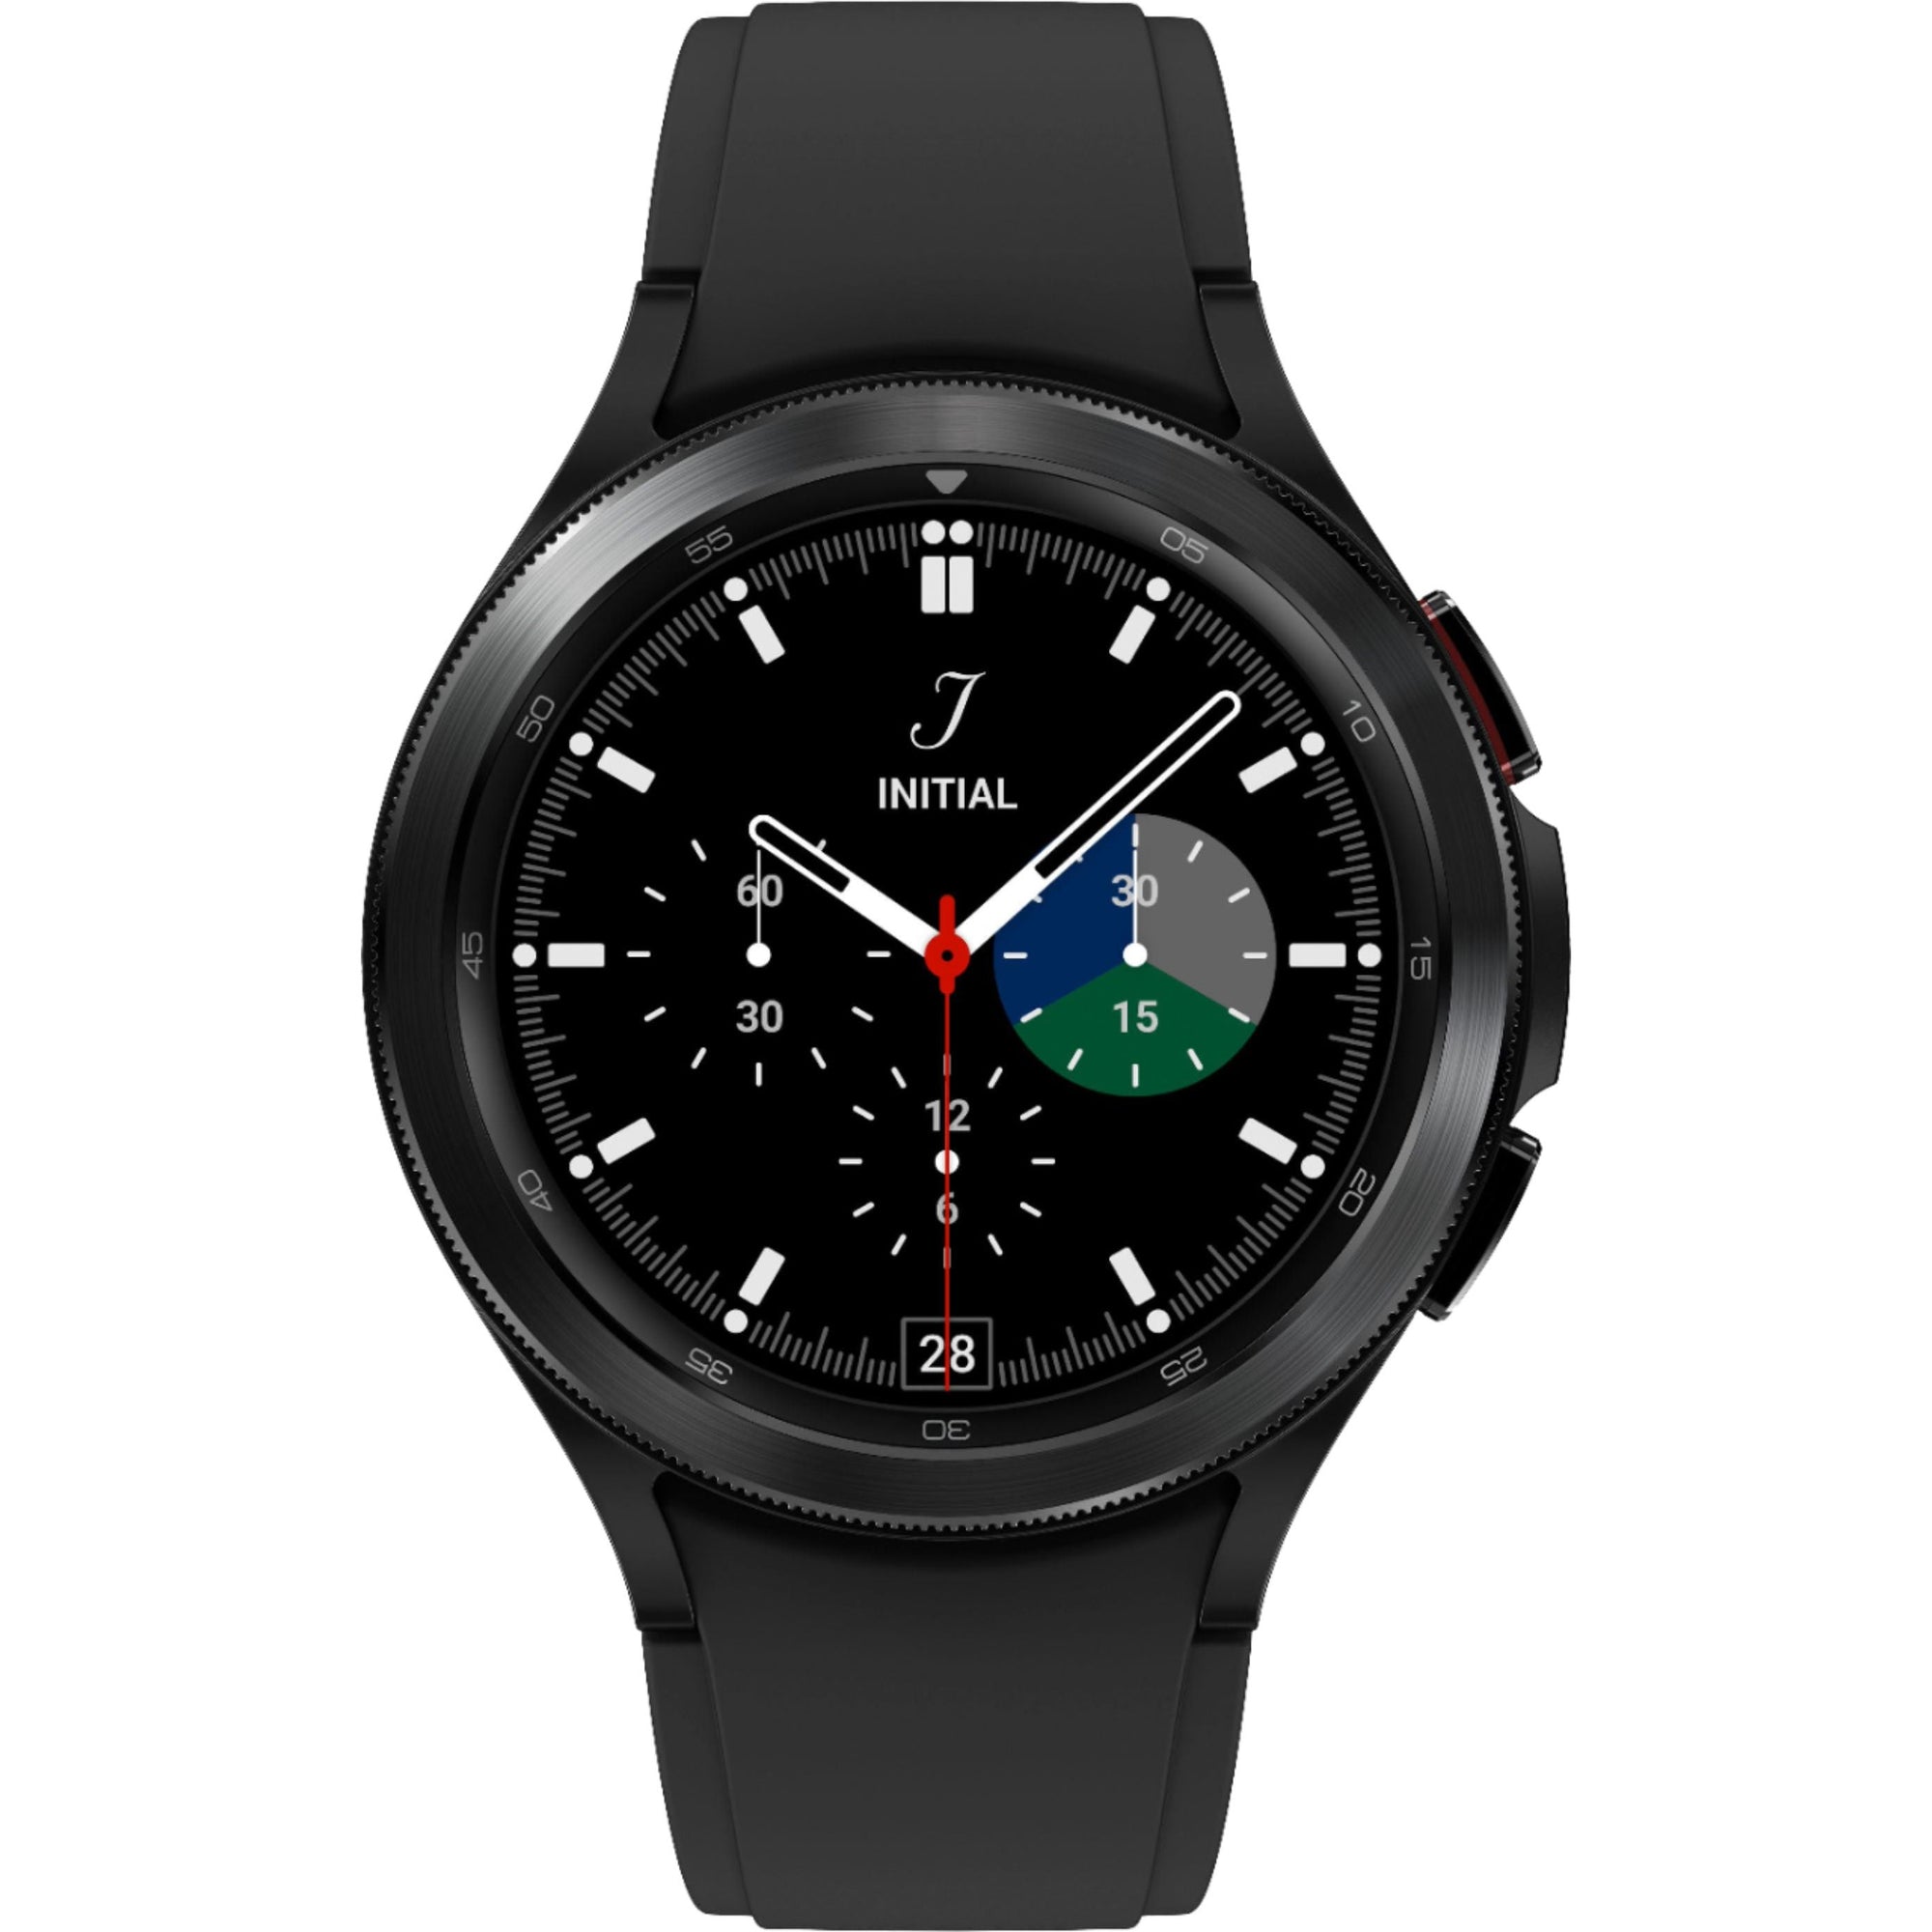 Samsung - Galaxy Watch4 Classic Stainless Steel Smartwatch 46mm BT - Black/Silver